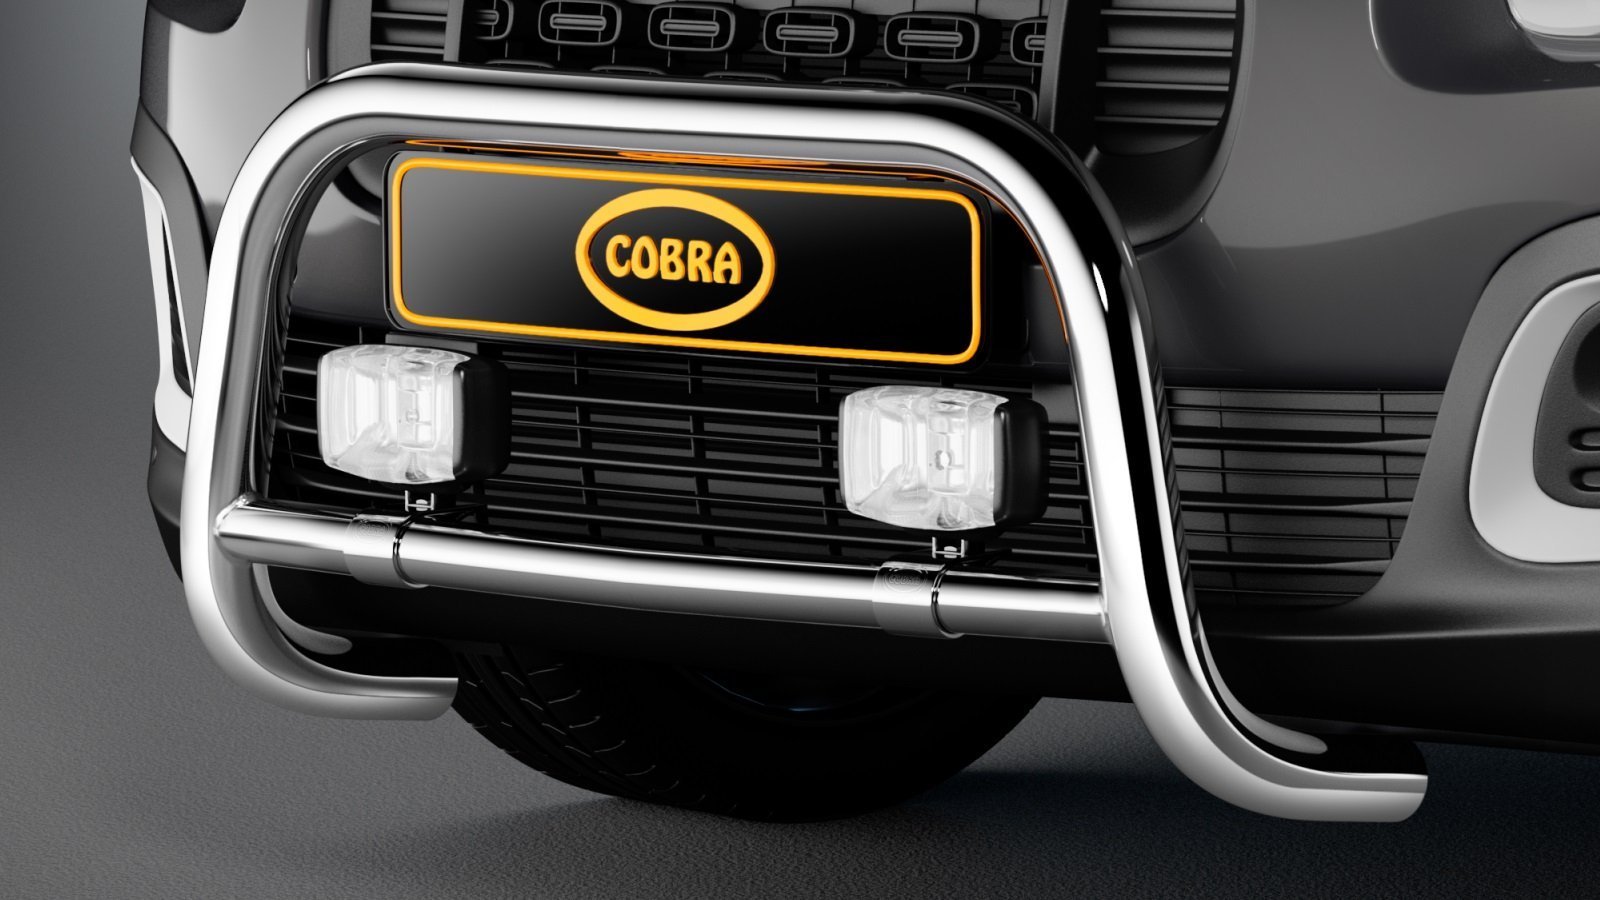 Opel Combo EU-Valorauta (Cobra)